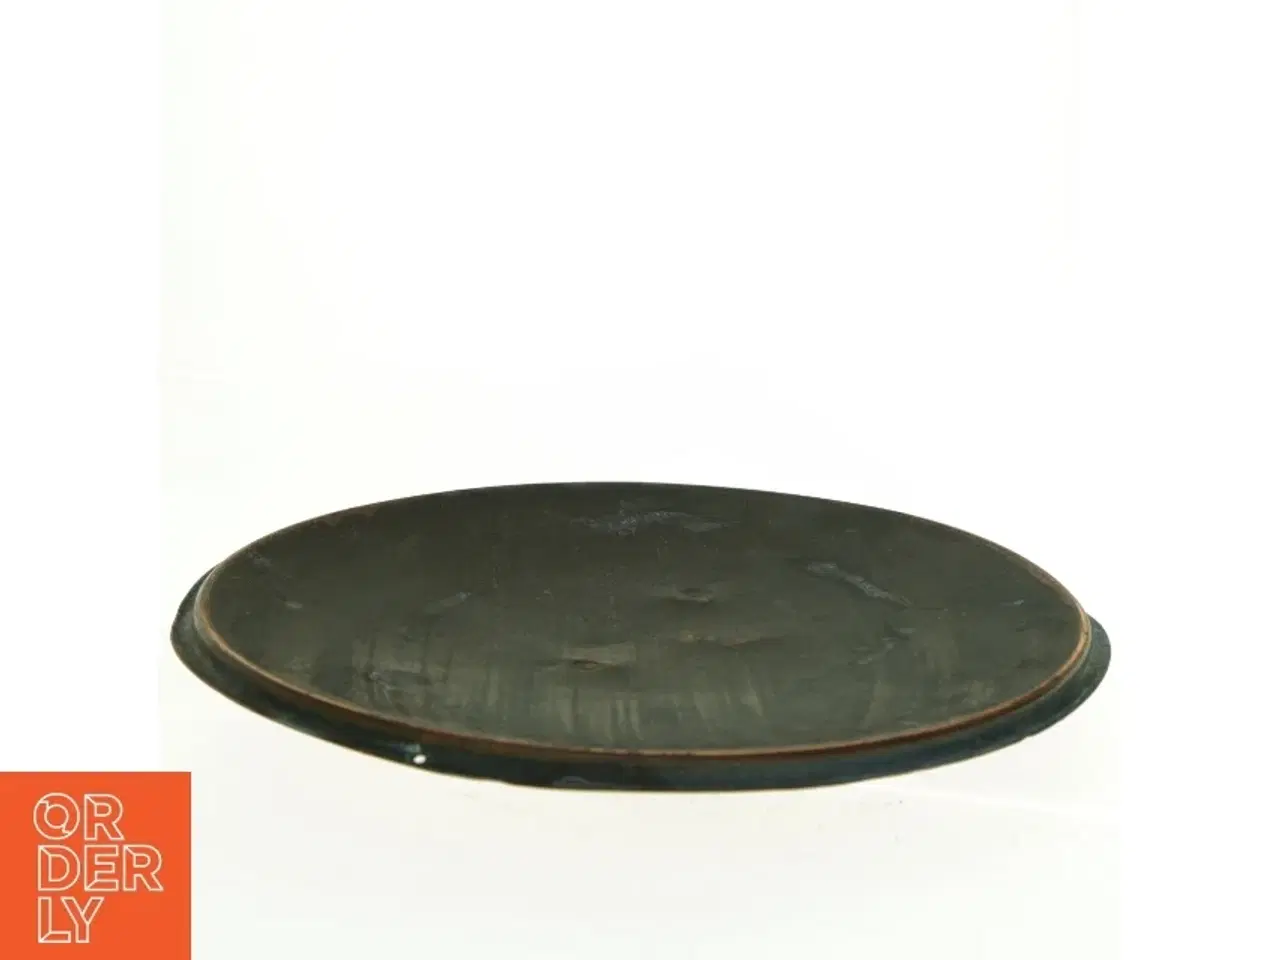 Billede 4 - Låg i kobber, diameter 31 cm